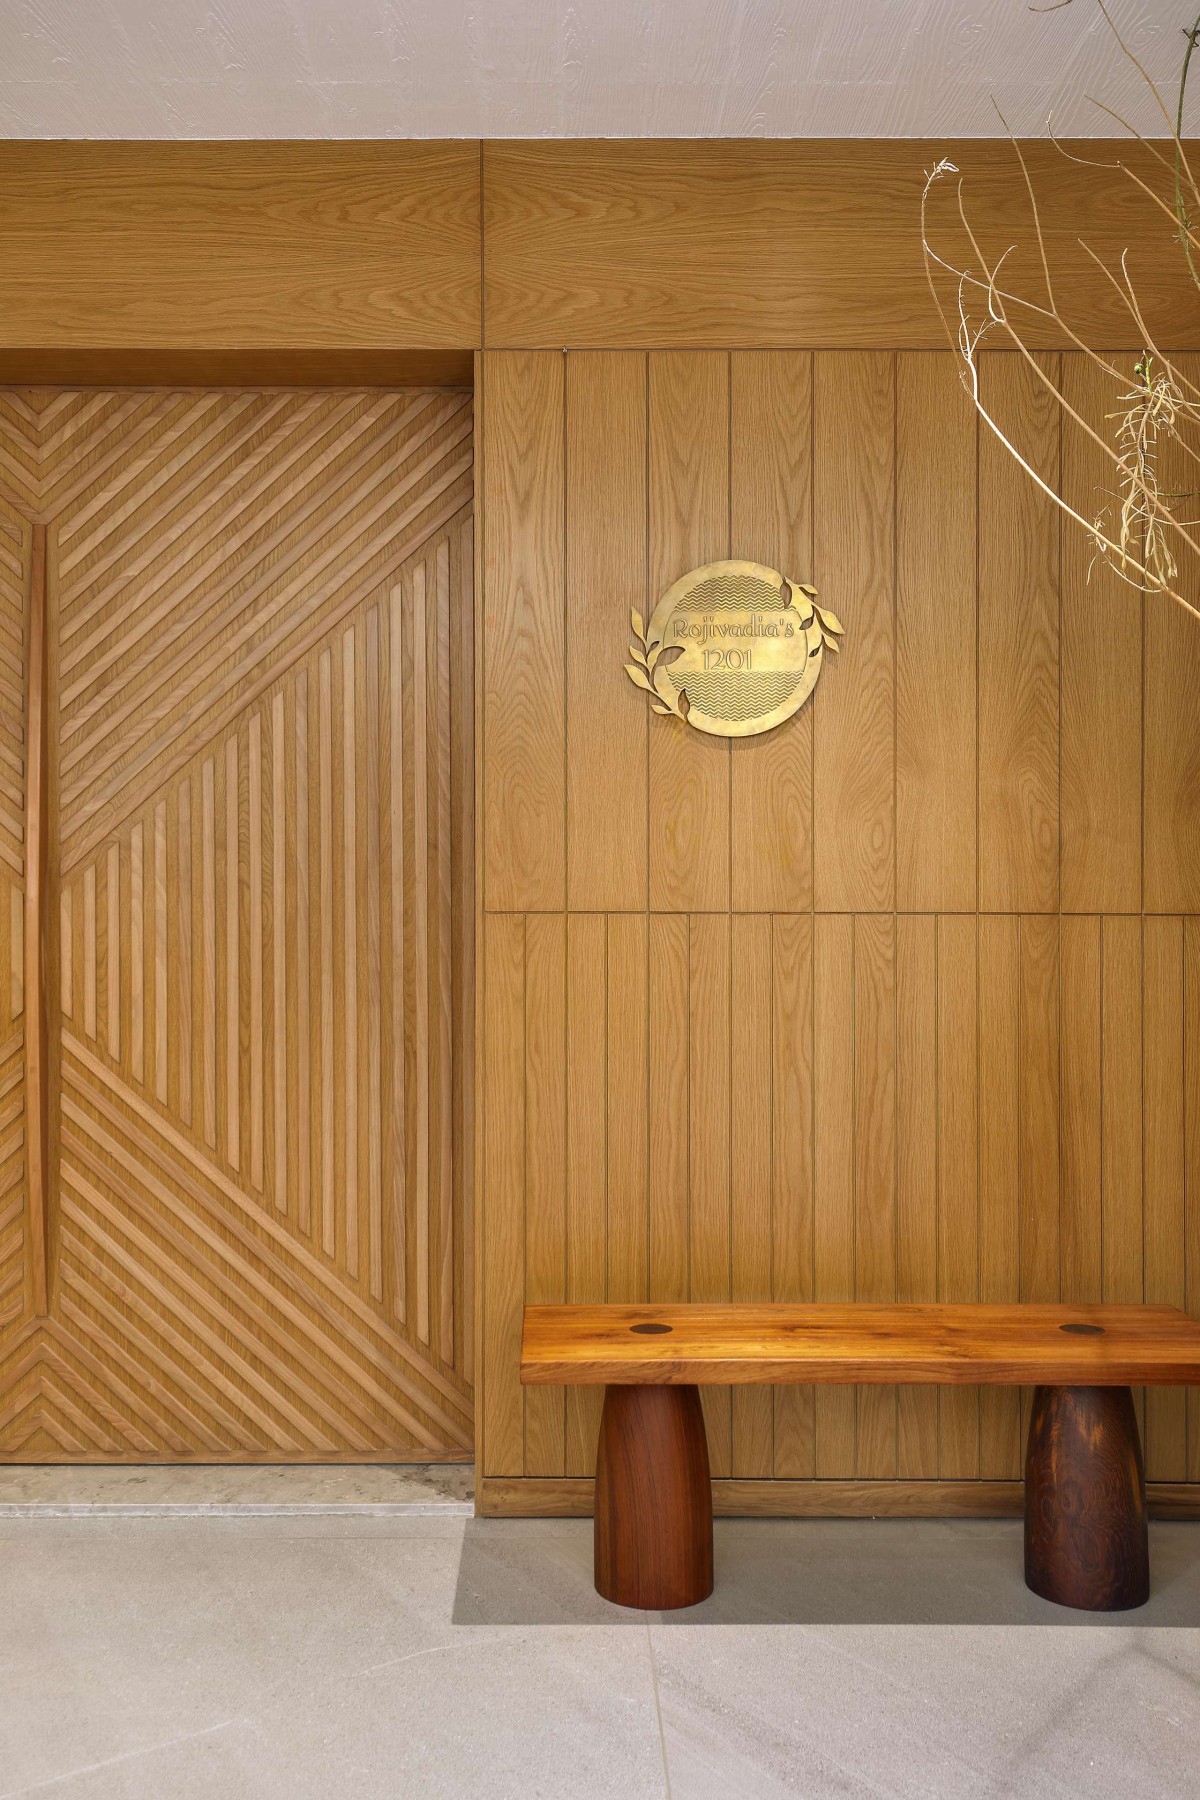 Foyer of Mansukh Rojiwadia’s Penthouse by Dipen Gada & Associates